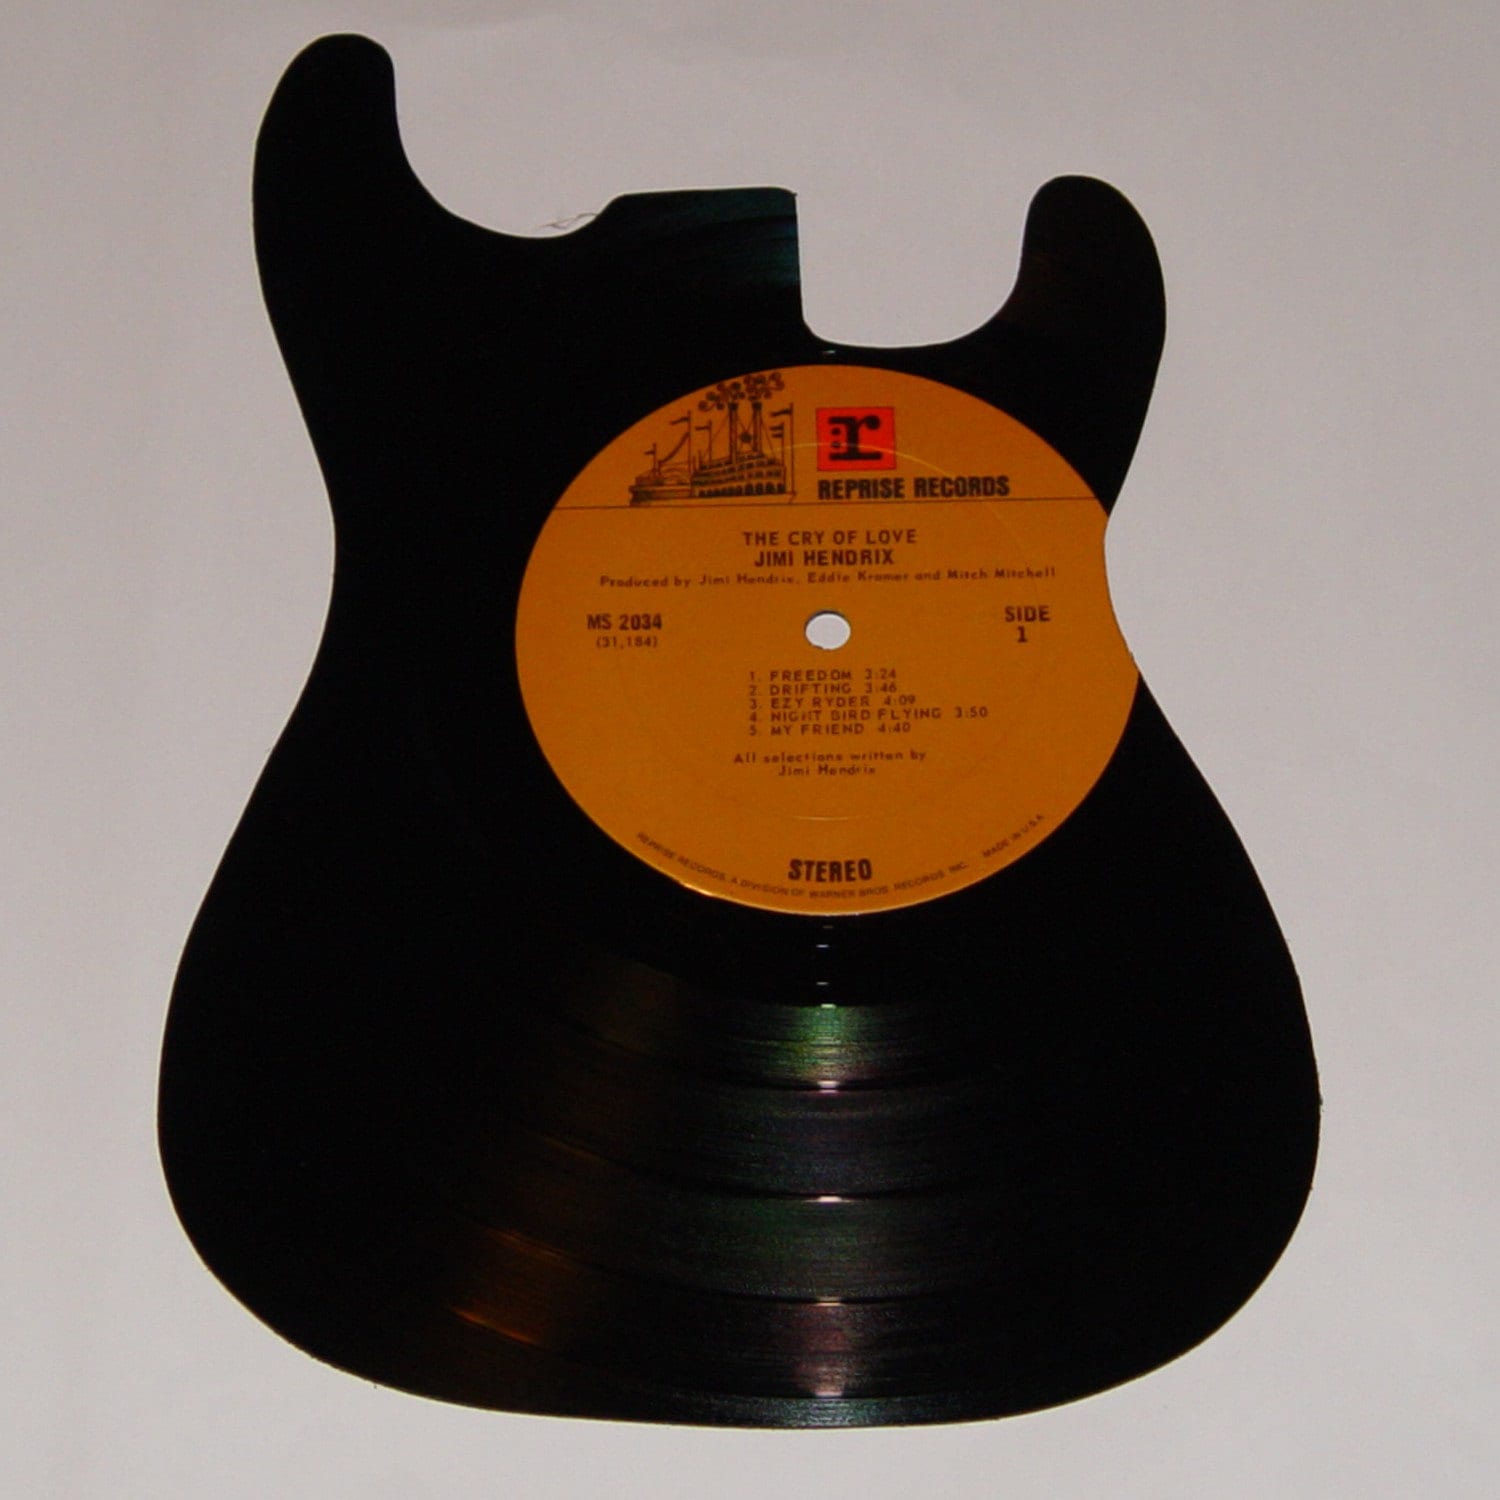 Vinyl Record Silhouette Guitar Jimi Hendrix
